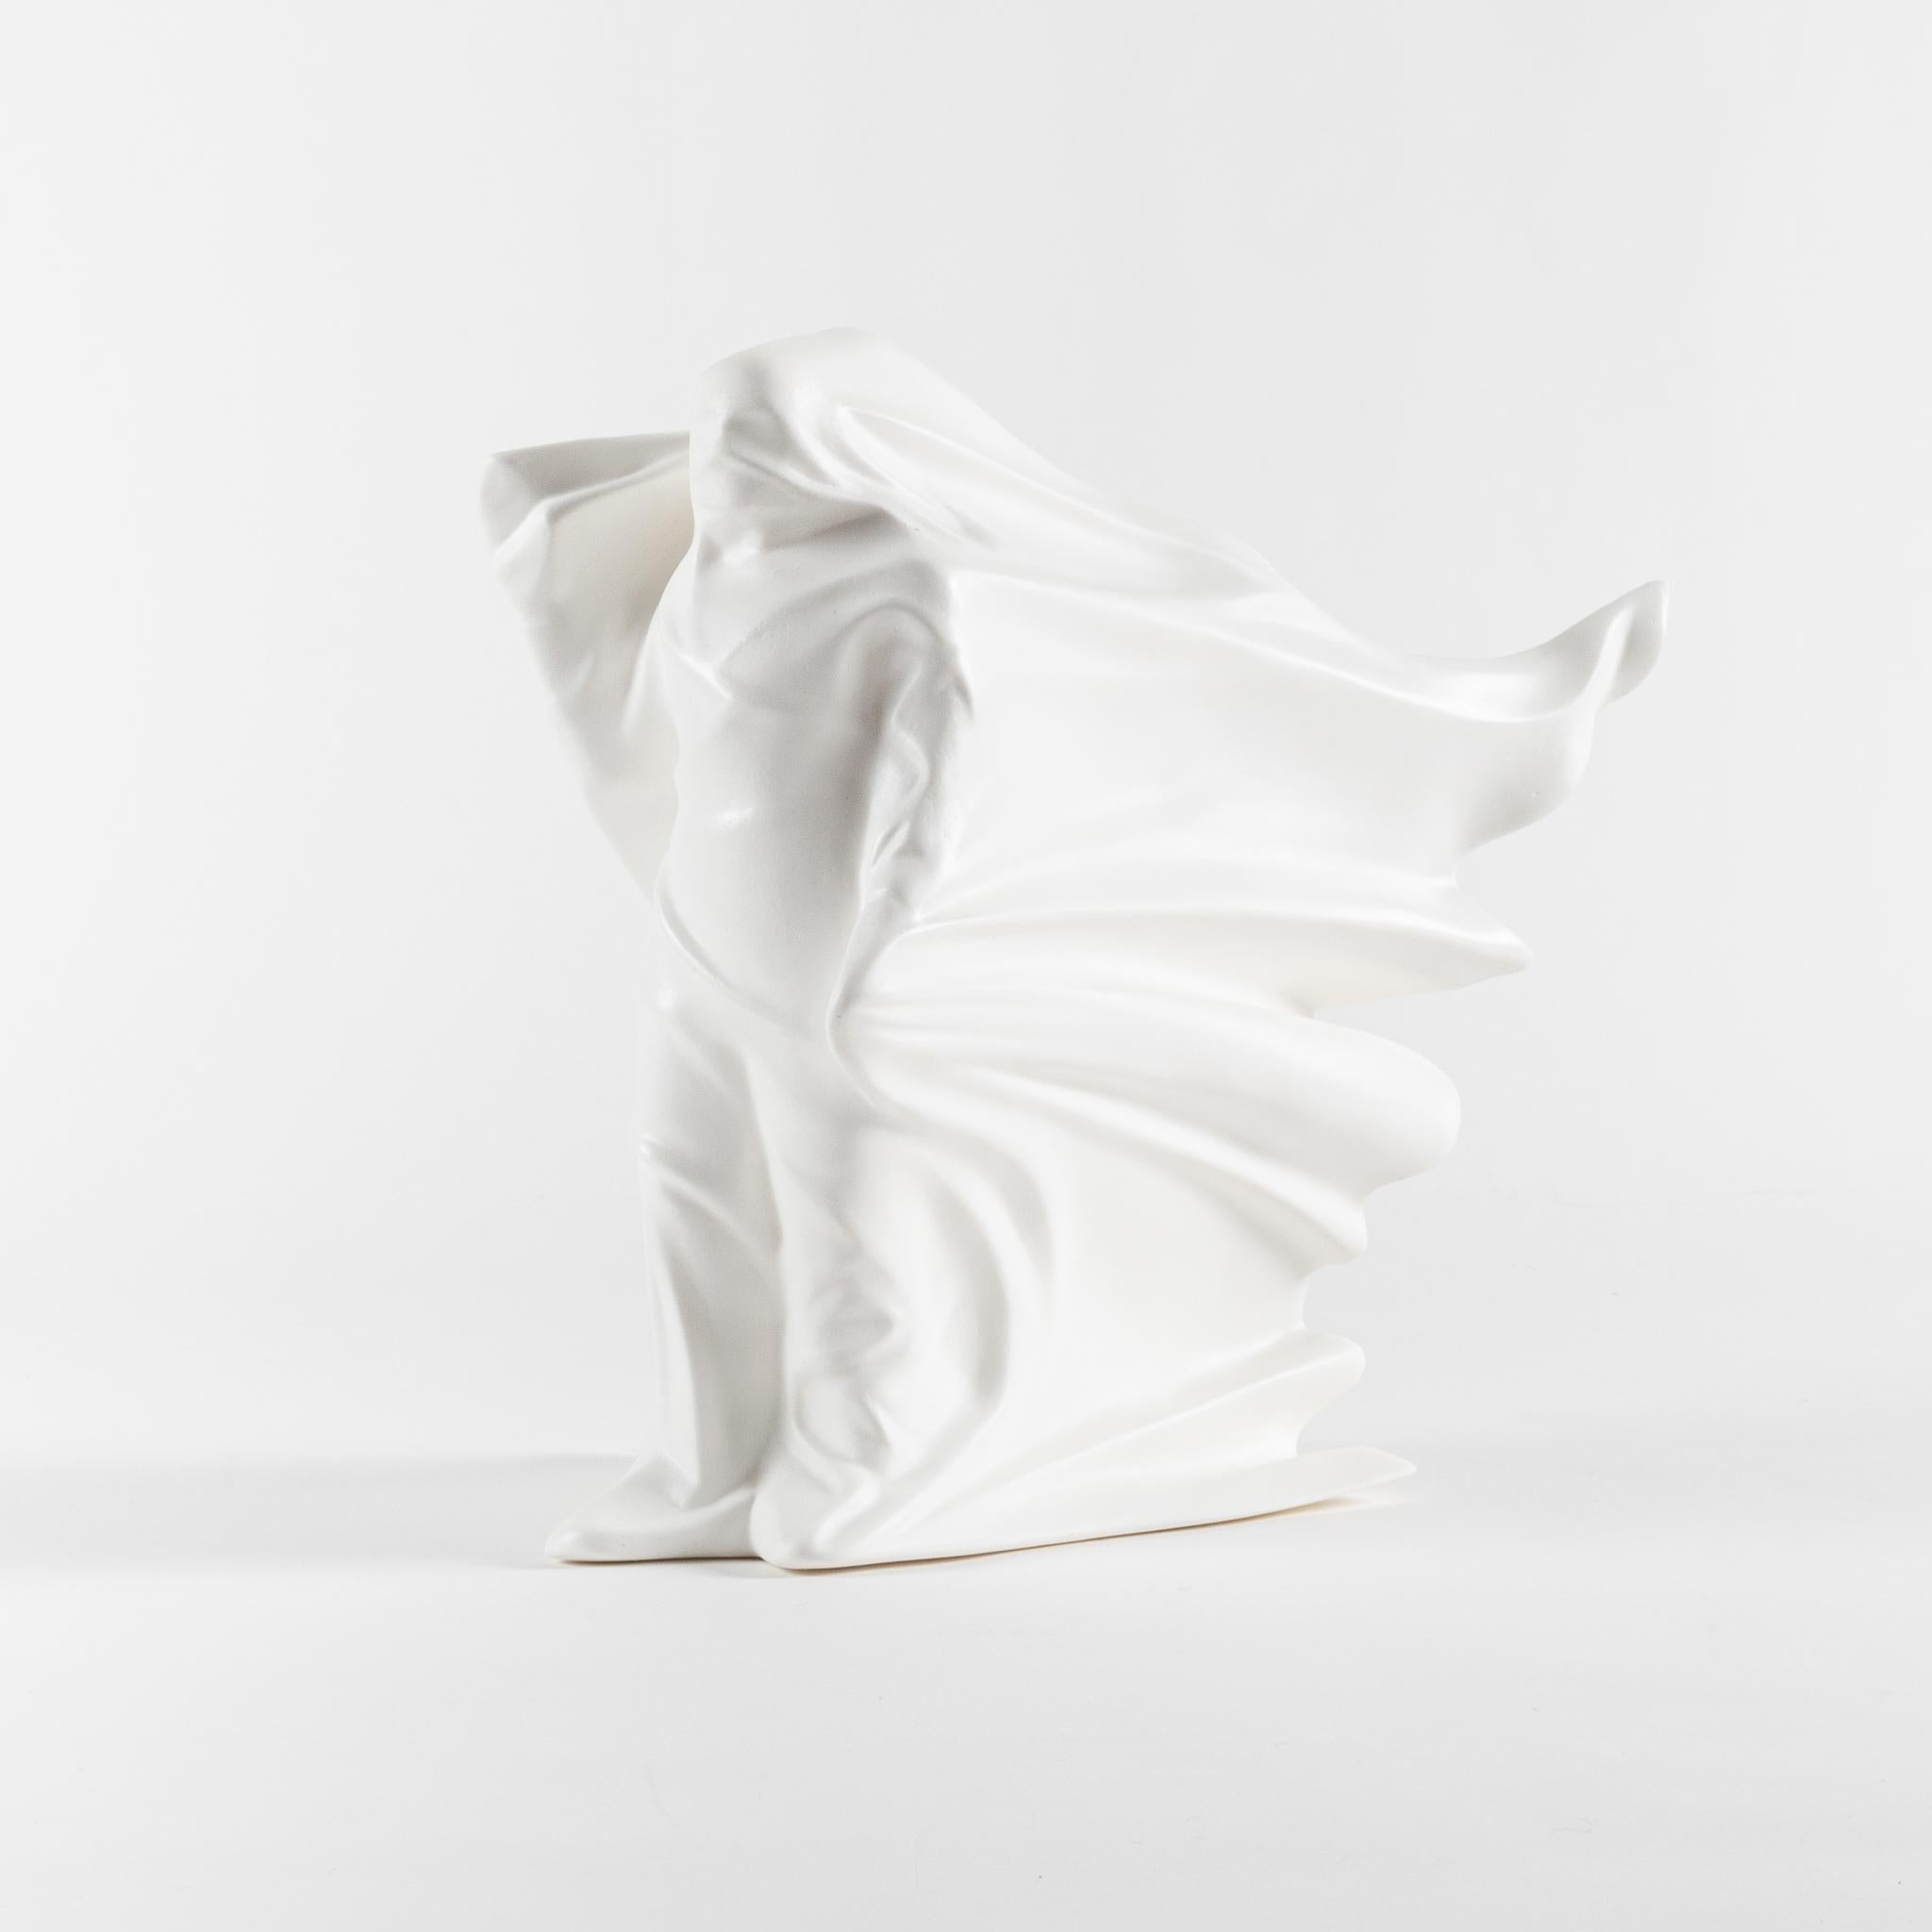  Hollow Figure Daniel Arsham White Ceramic Sculpture Modern Contemporary Design